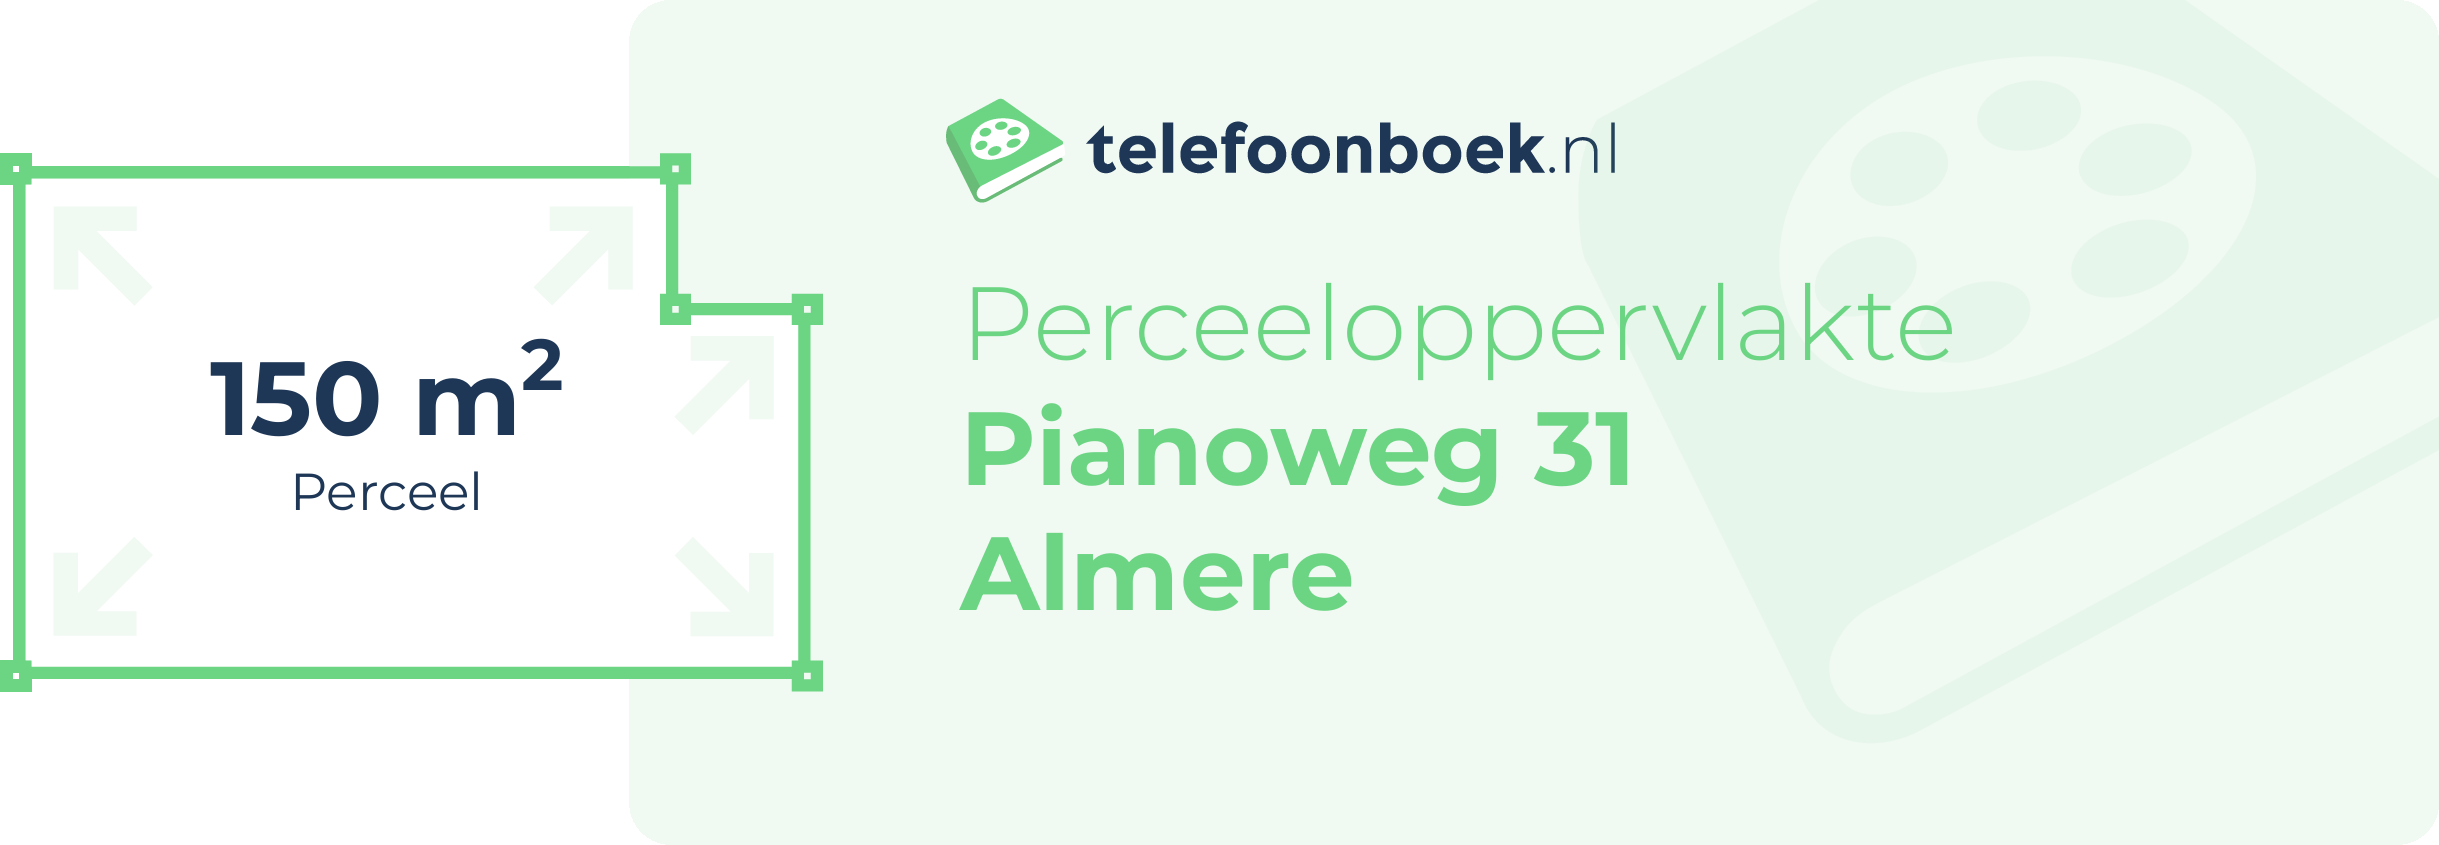 Perceeloppervlakte Pianoweg 31 Almere